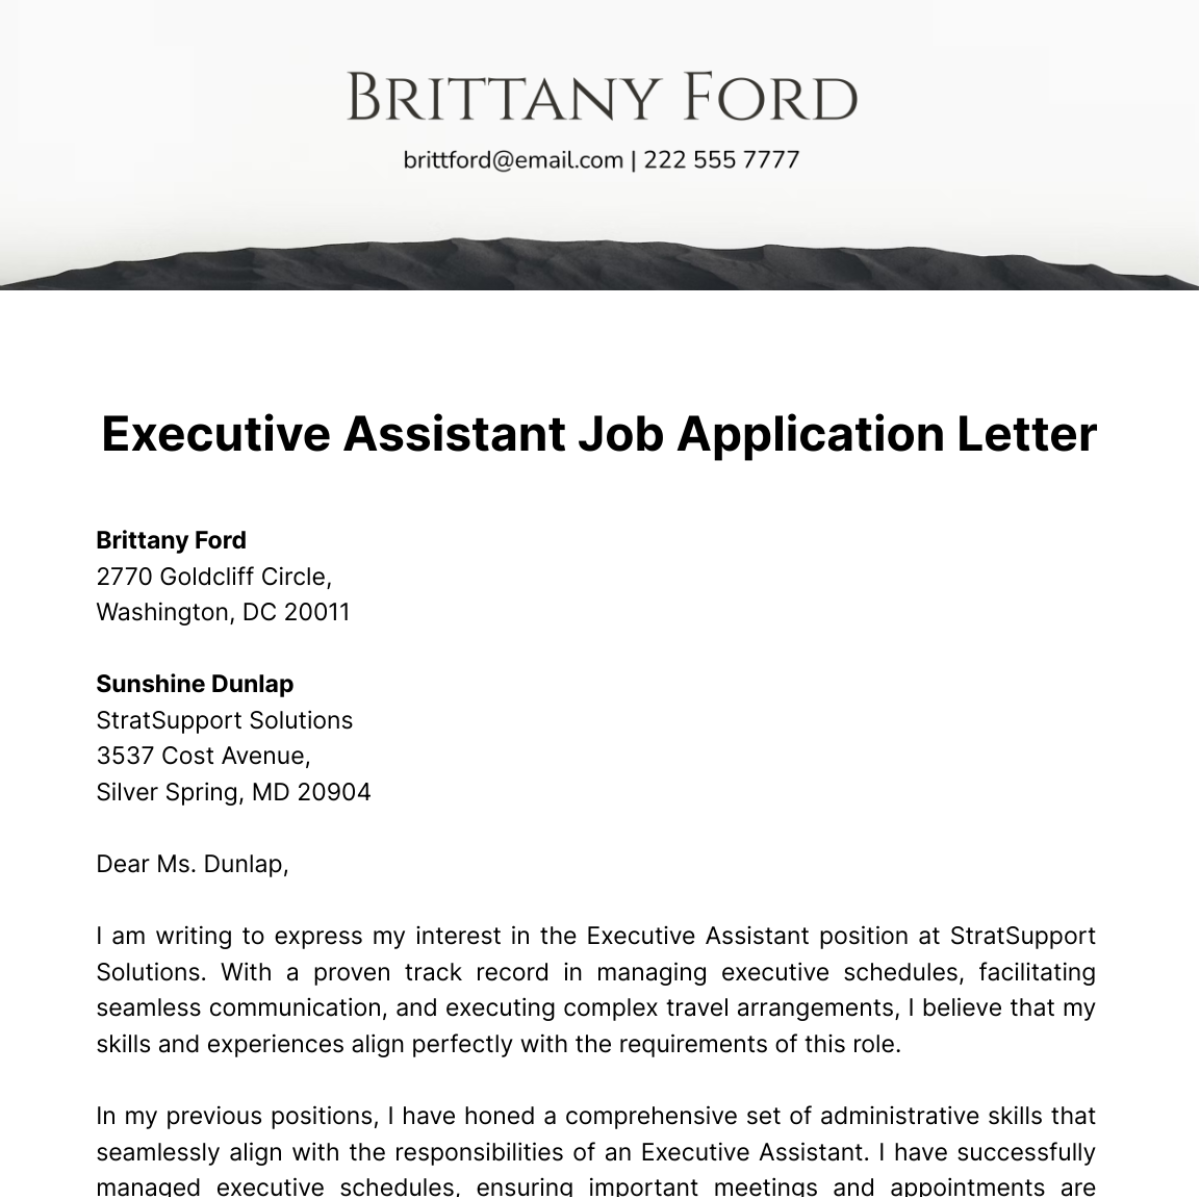 Executive Assistant Job Application Letter  Template